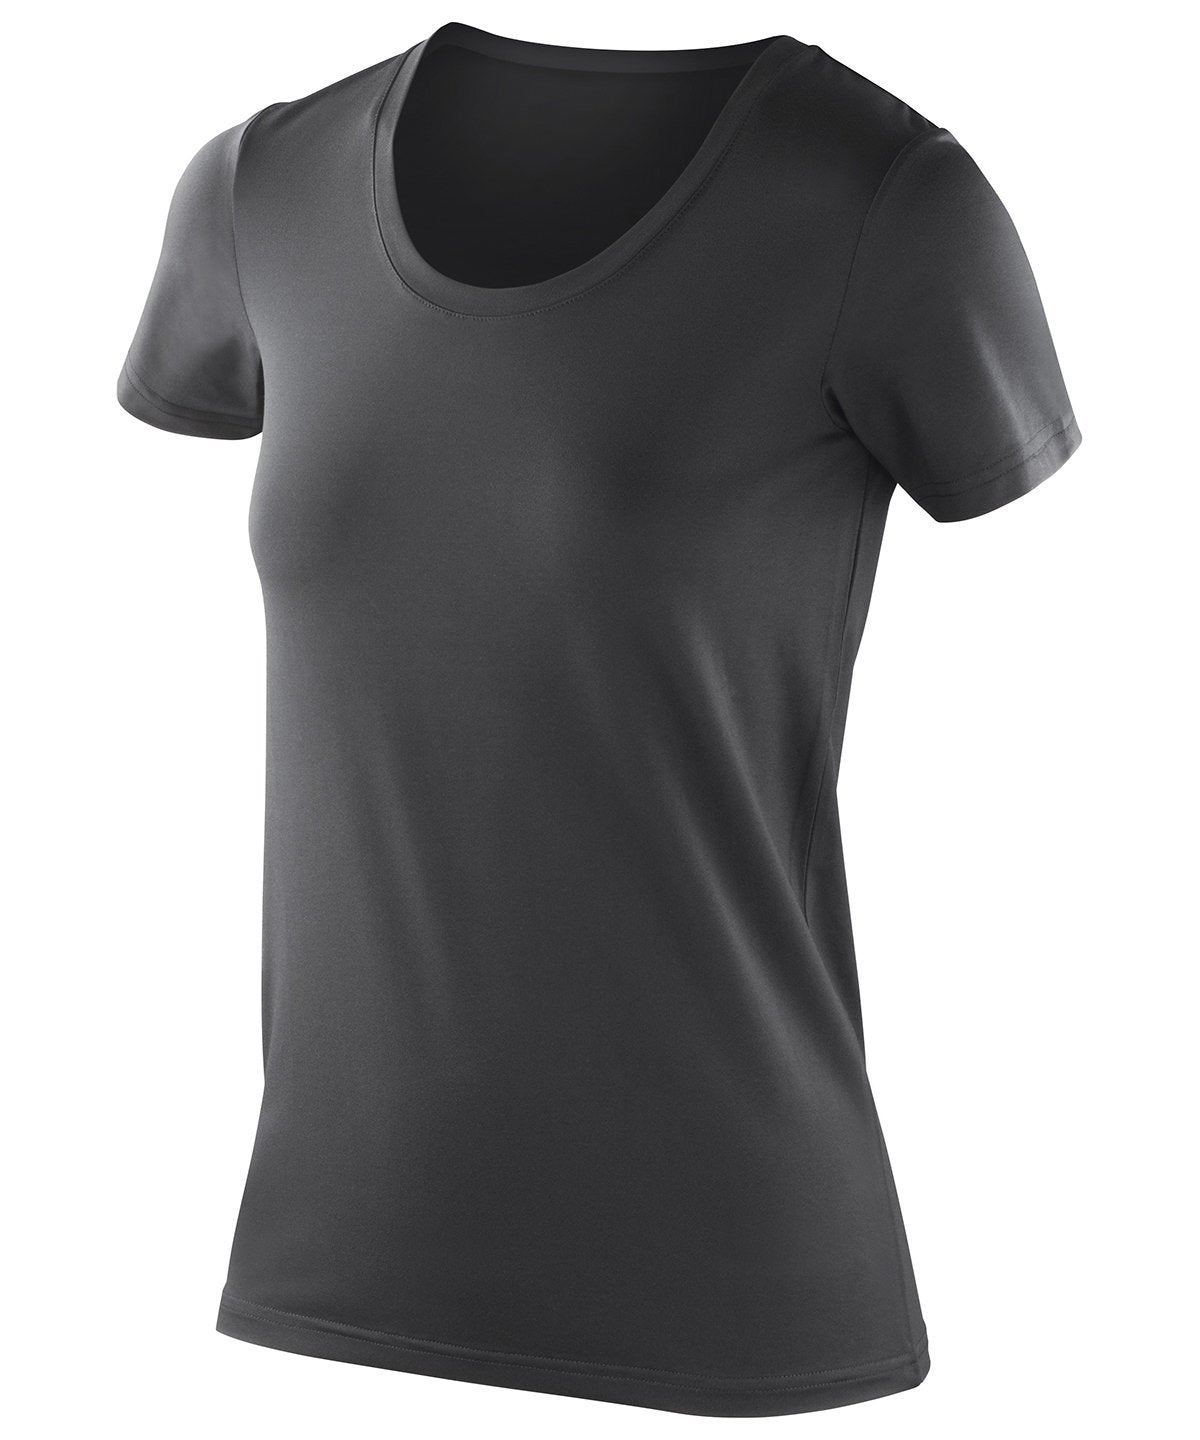 Ladies Hi-Tech Stretch t-Shirt - Equine Designs